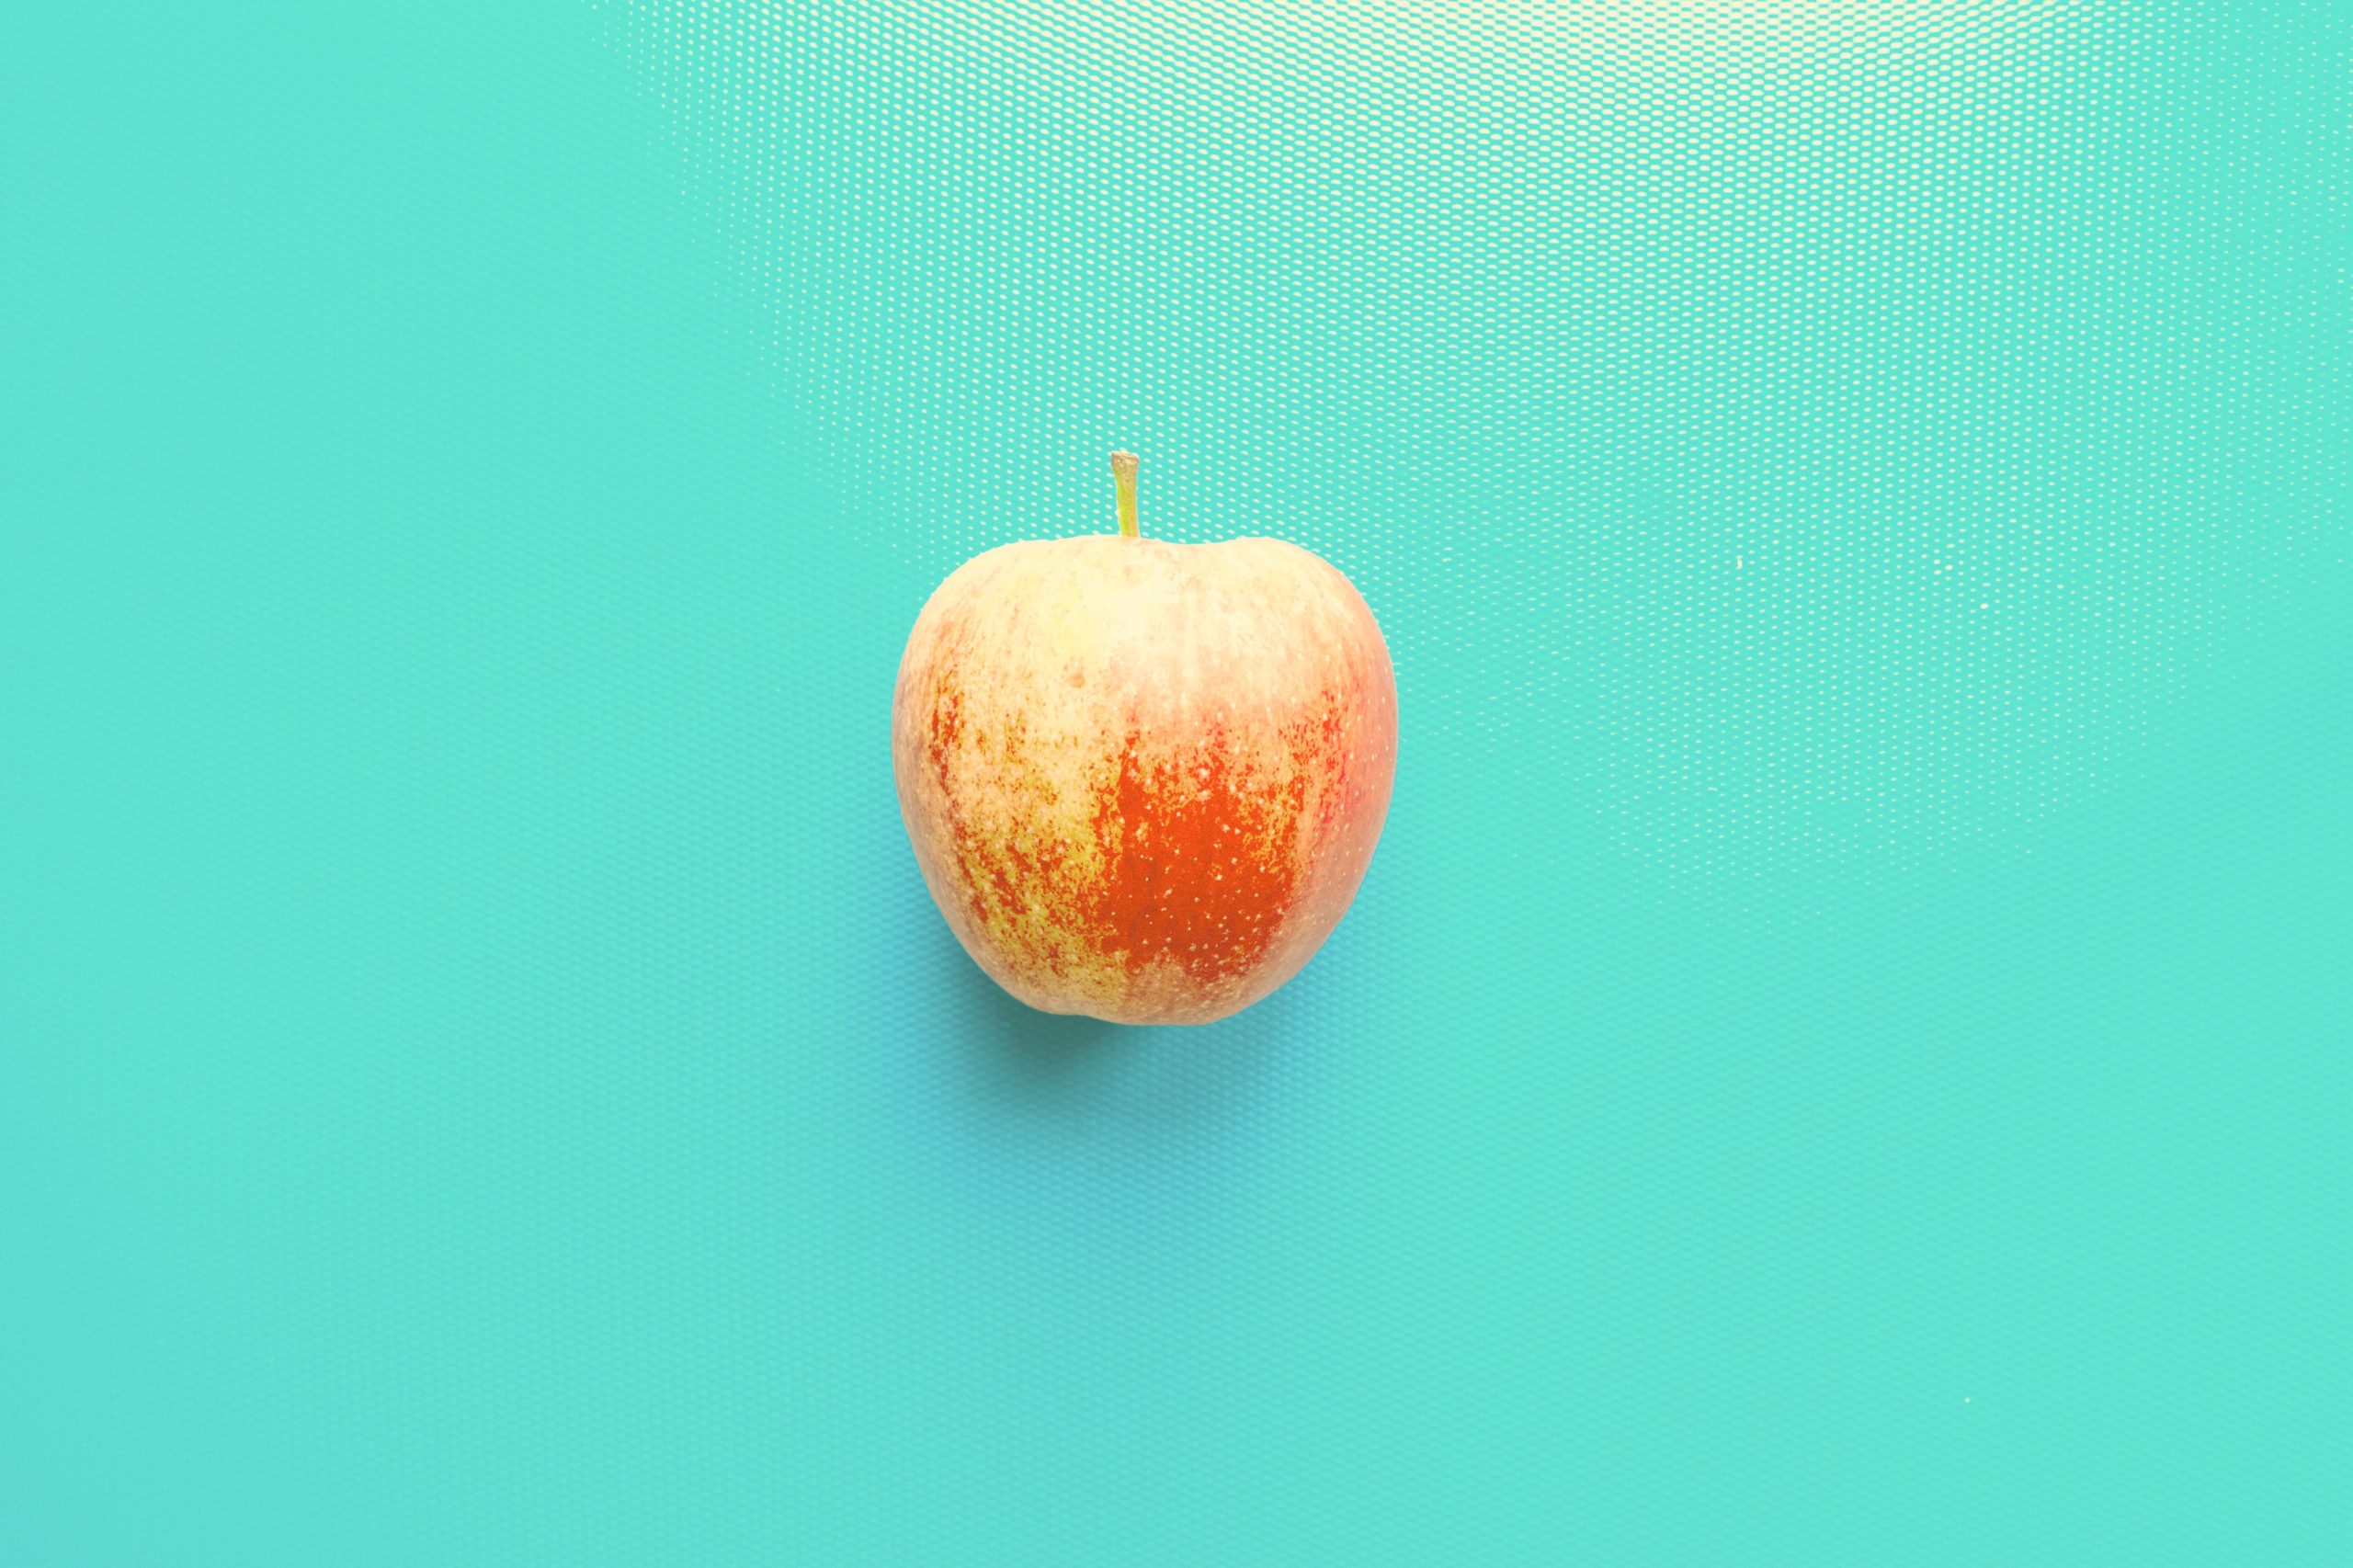 <img src="apple.jpg" alt=apple on blue background"/> 